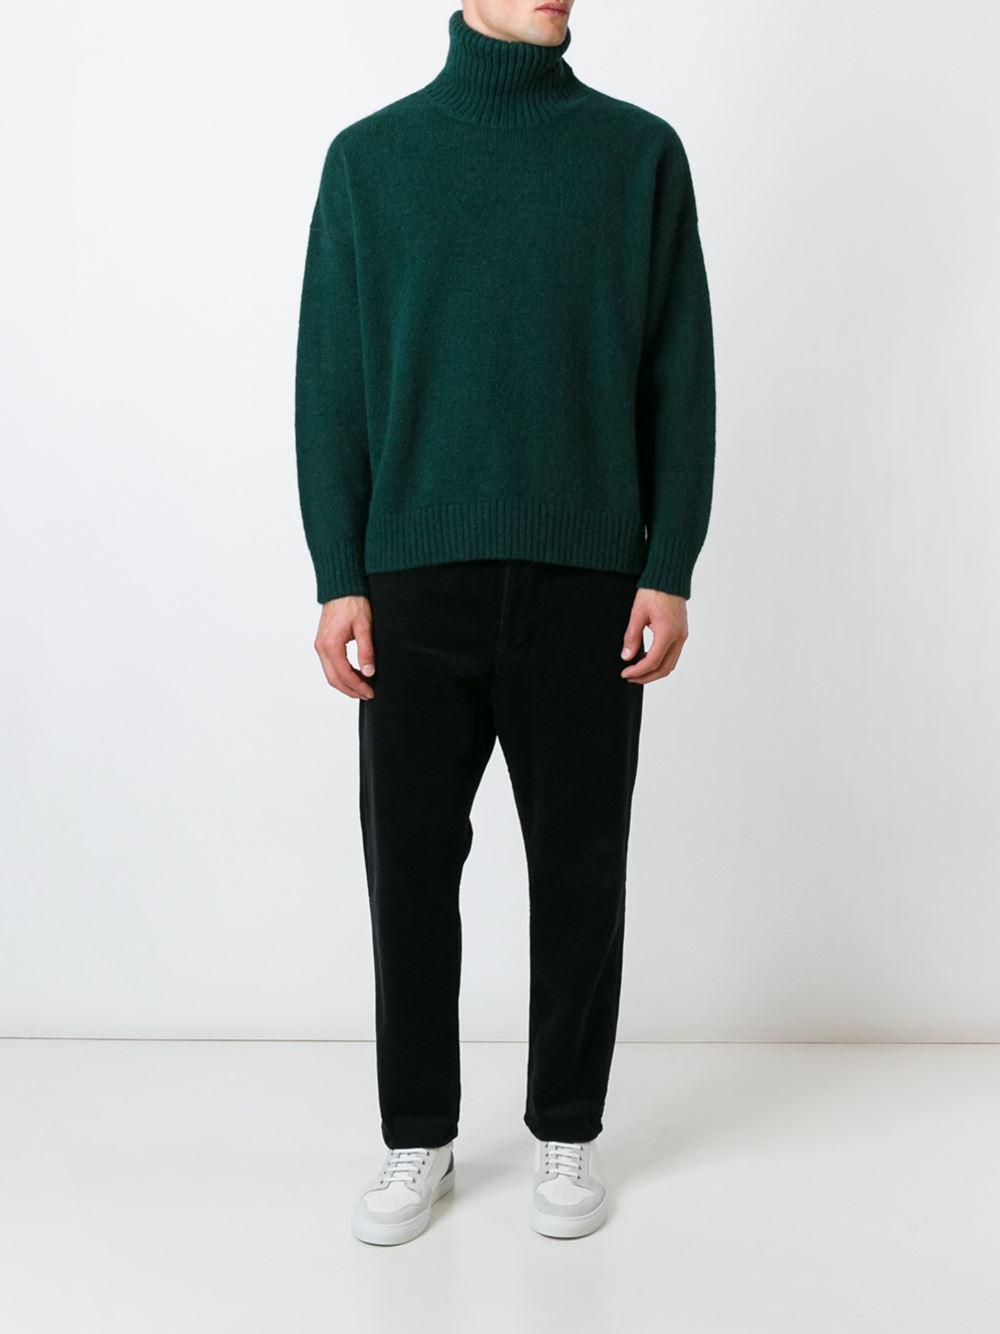 AMI Wool Oversized Turtleneck Sweater in Green for Men - Lyst